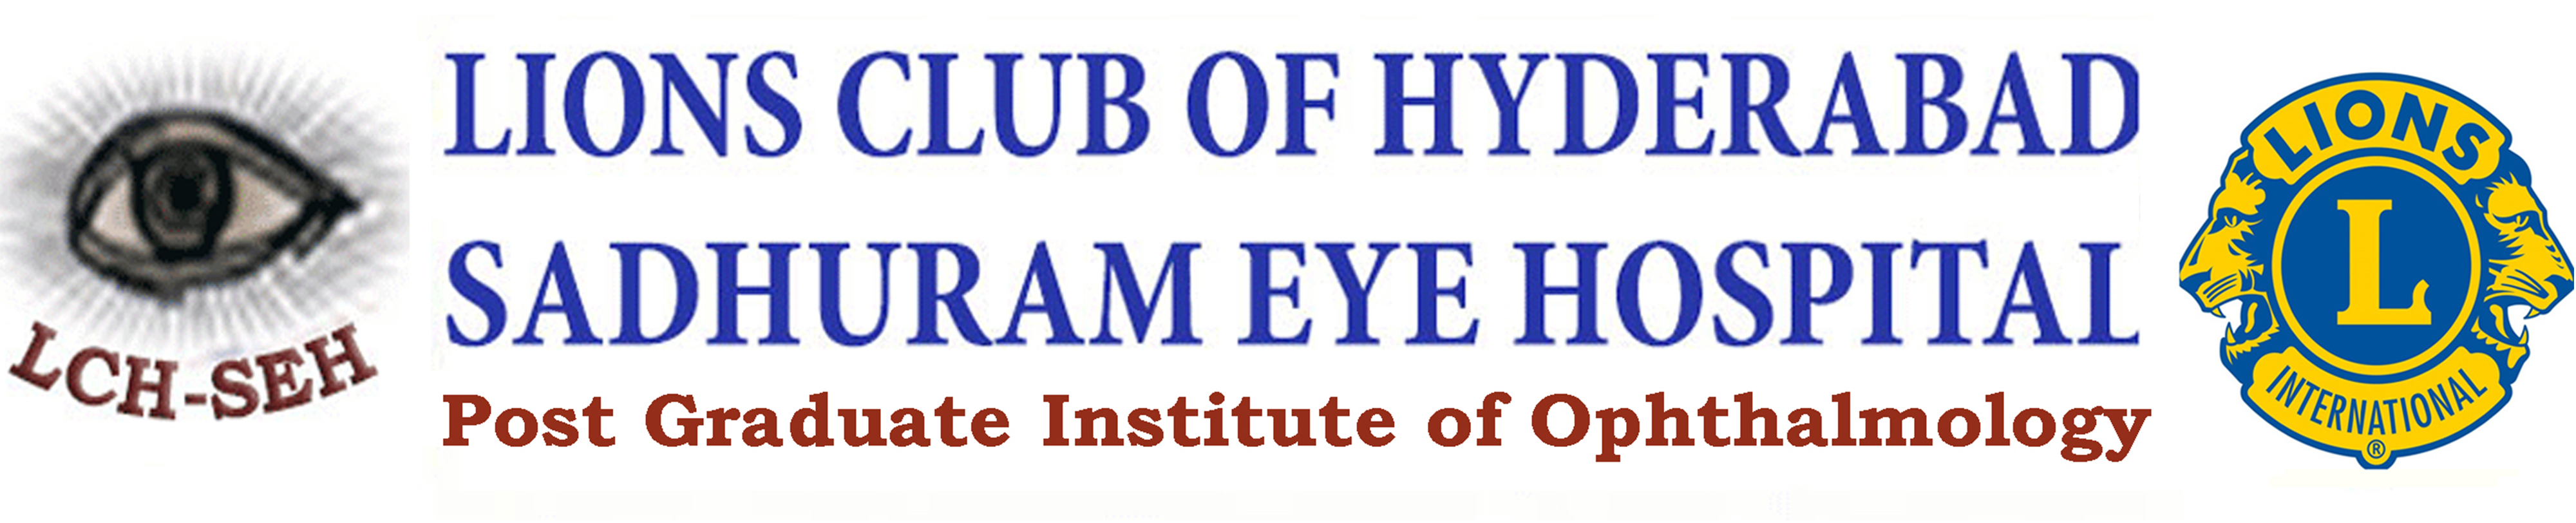 Lions Club of Hyderabad Sadhuram Eye Hospital|Veterinary|Medical Services